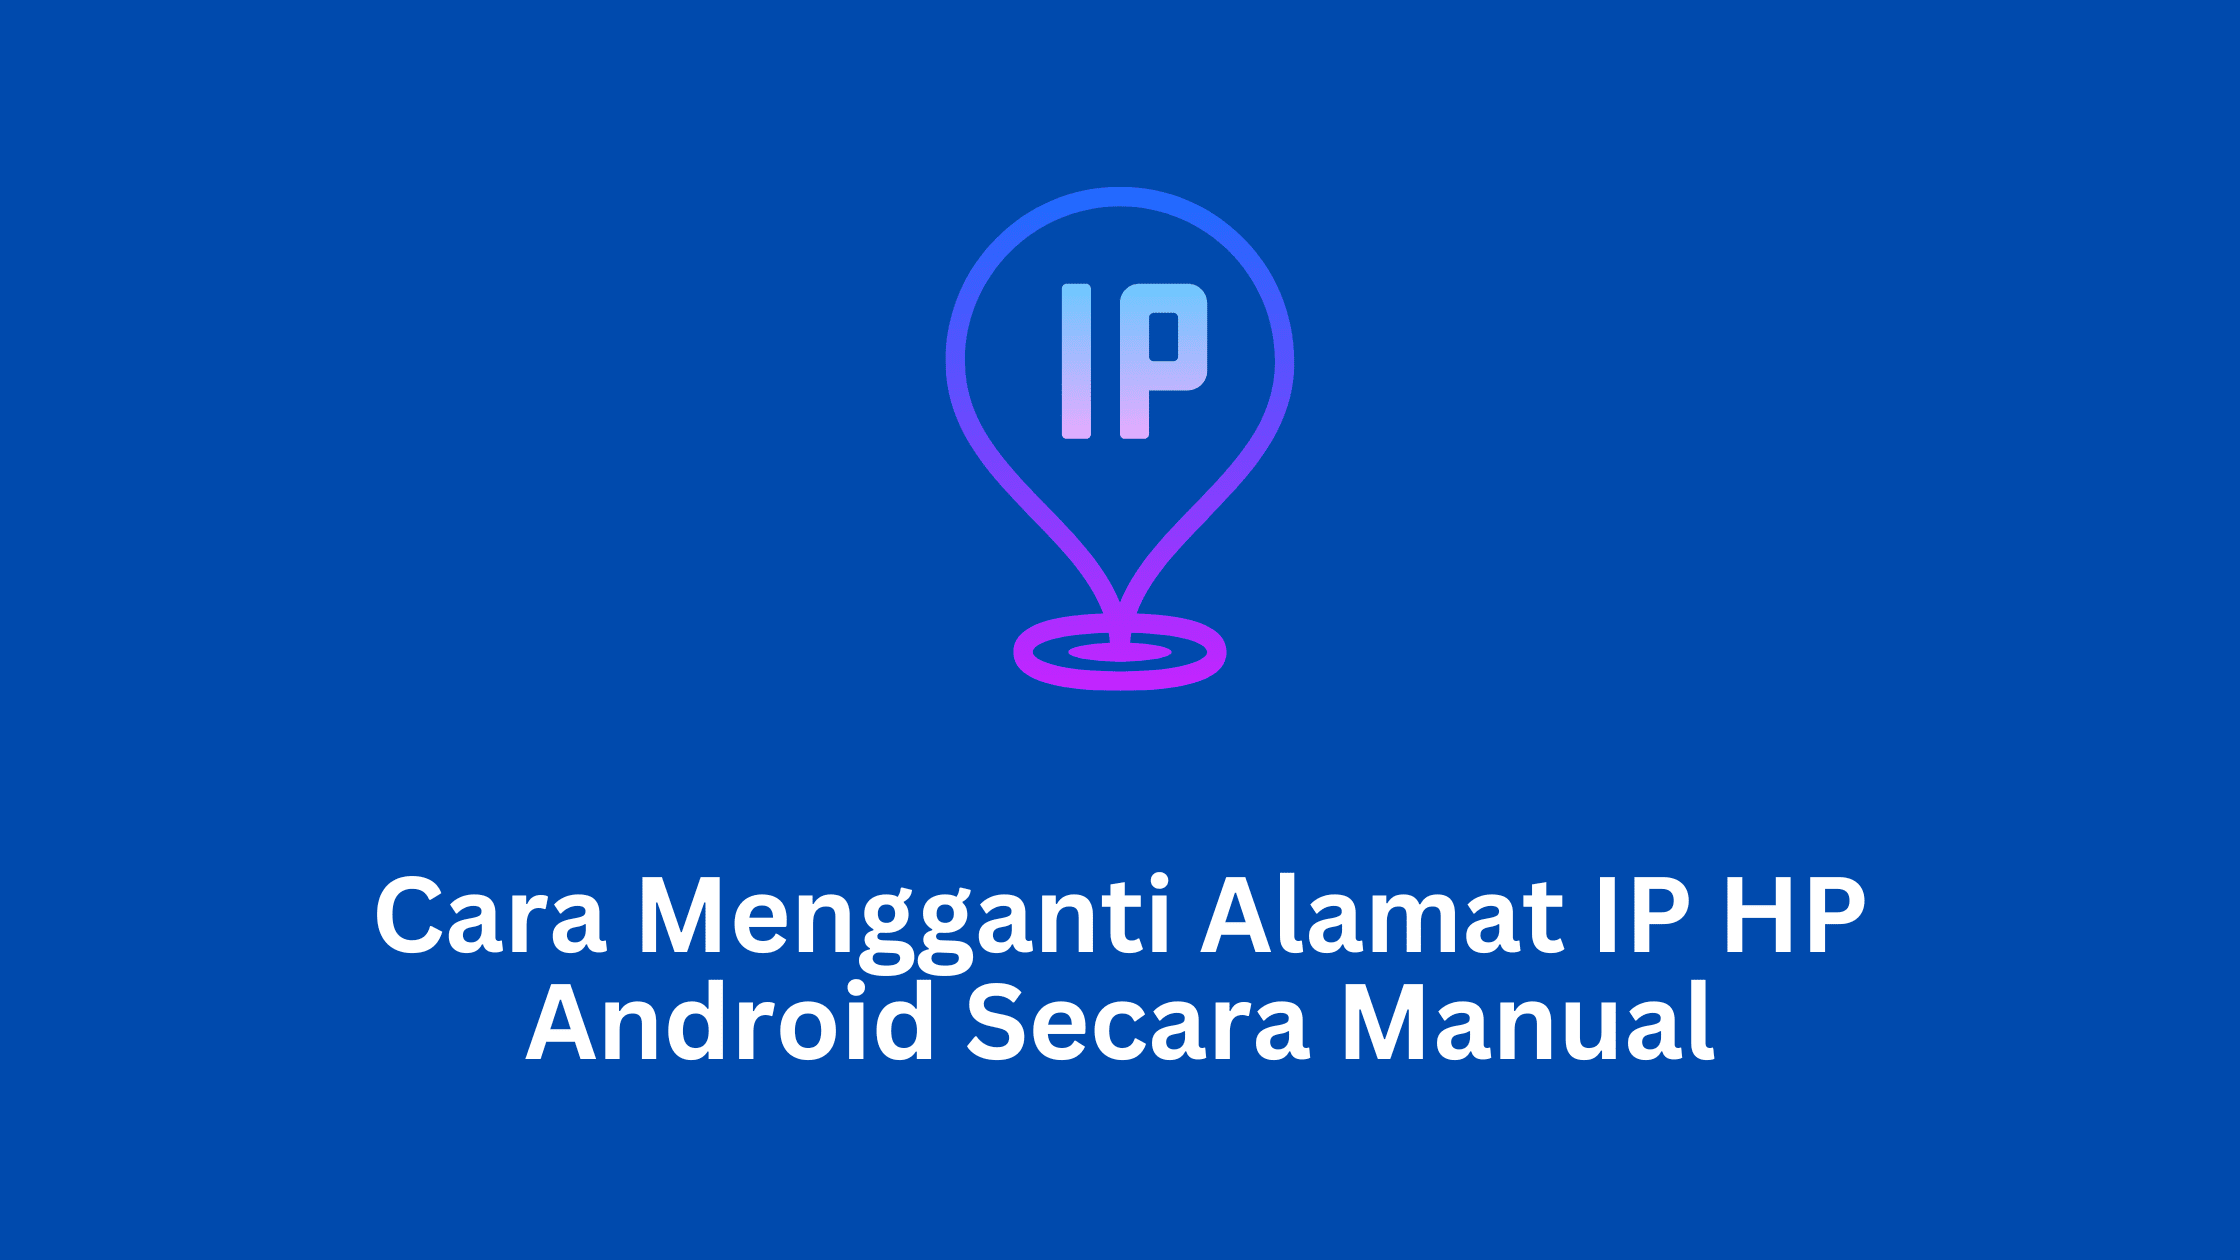 Cara Mengganti Alamat IP HP Android Secara Manual